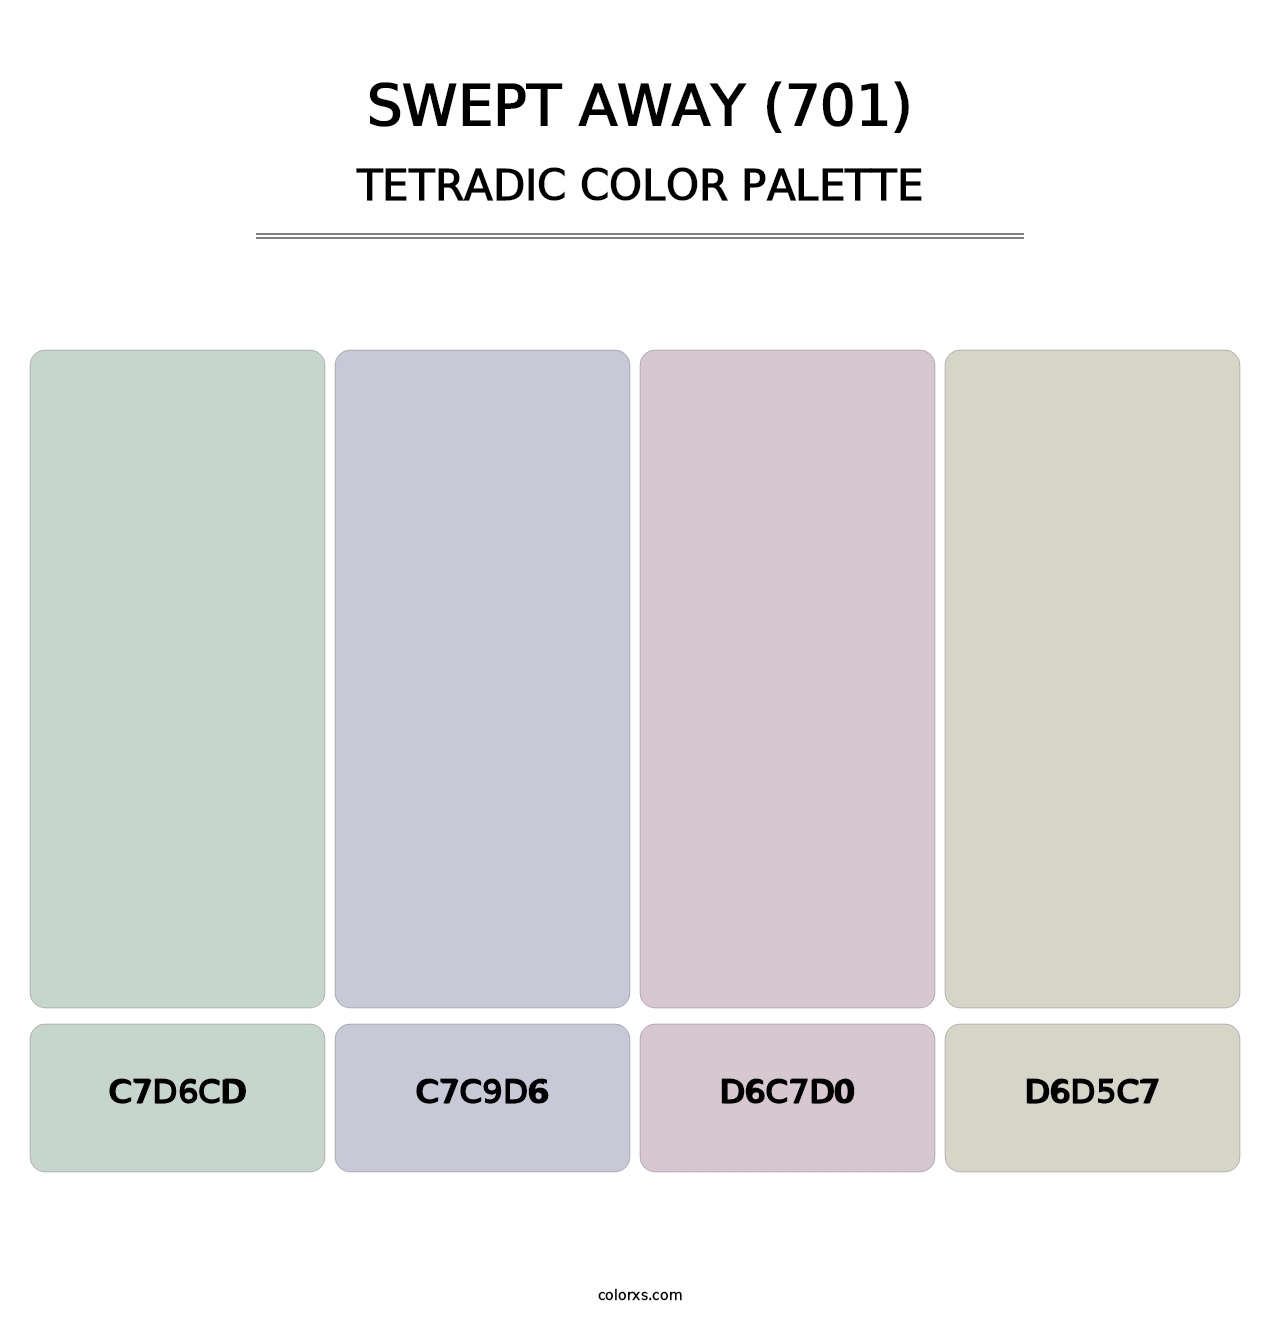 Swept Away (701) - Tetradic Color Palette